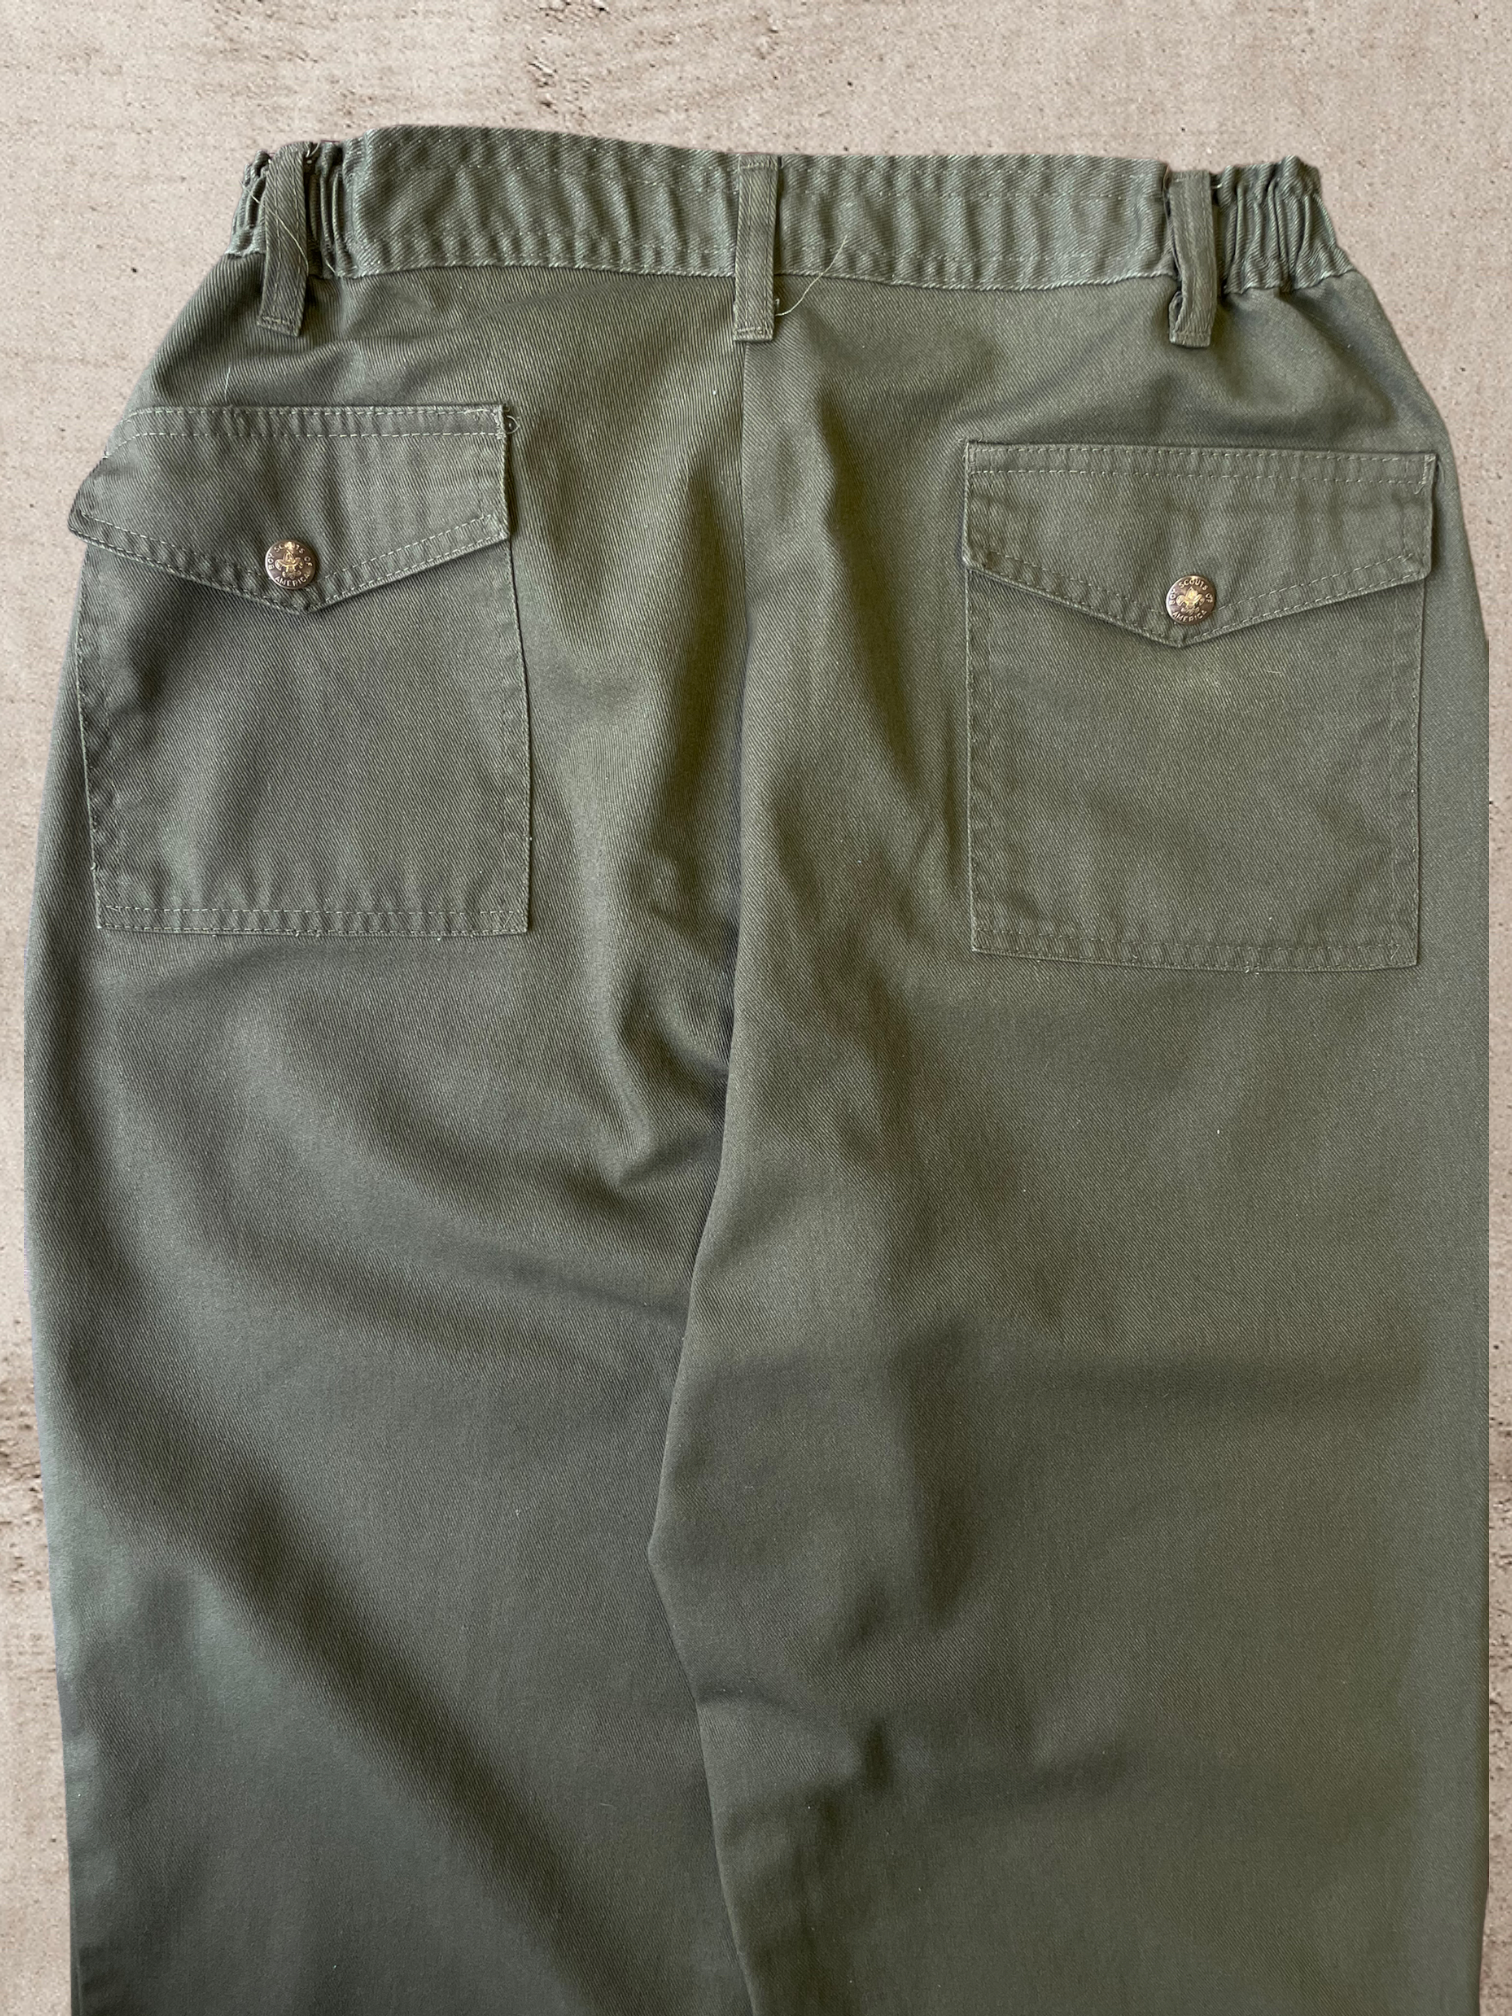 80s Boy Scout Cargo Pants - 30x30